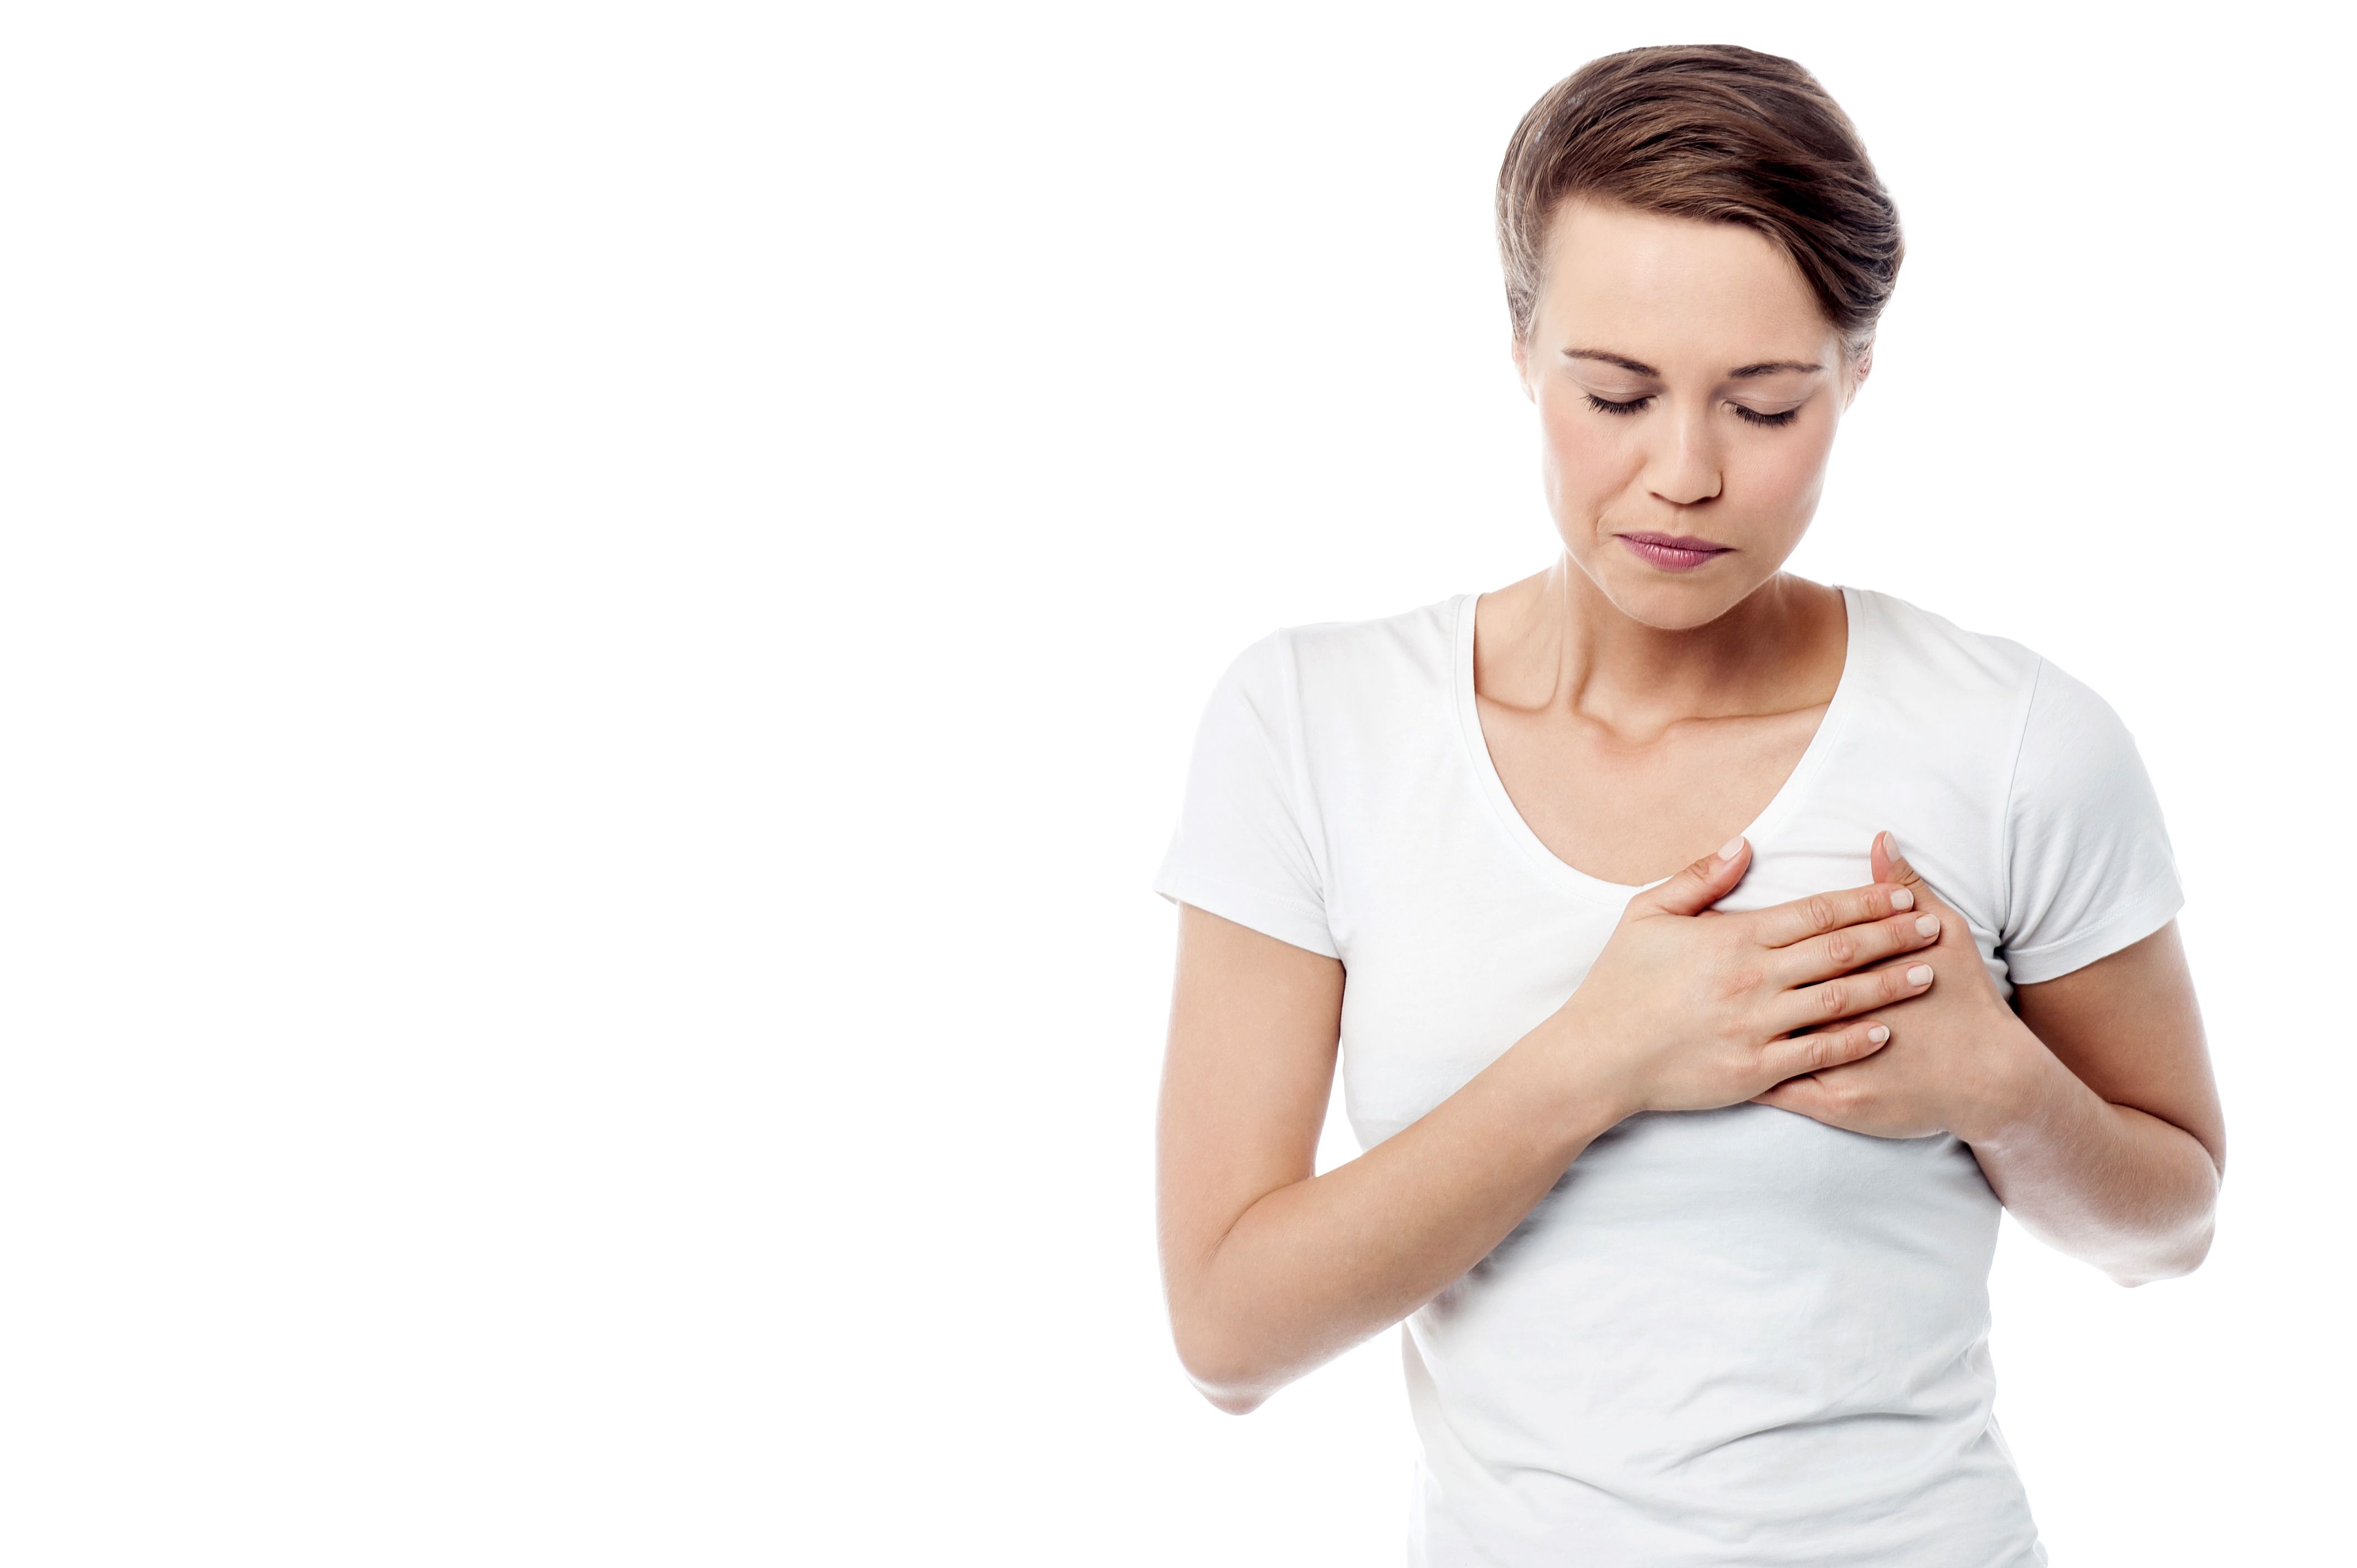 O Risco Cardiovascular na Mulher após a Menopausa